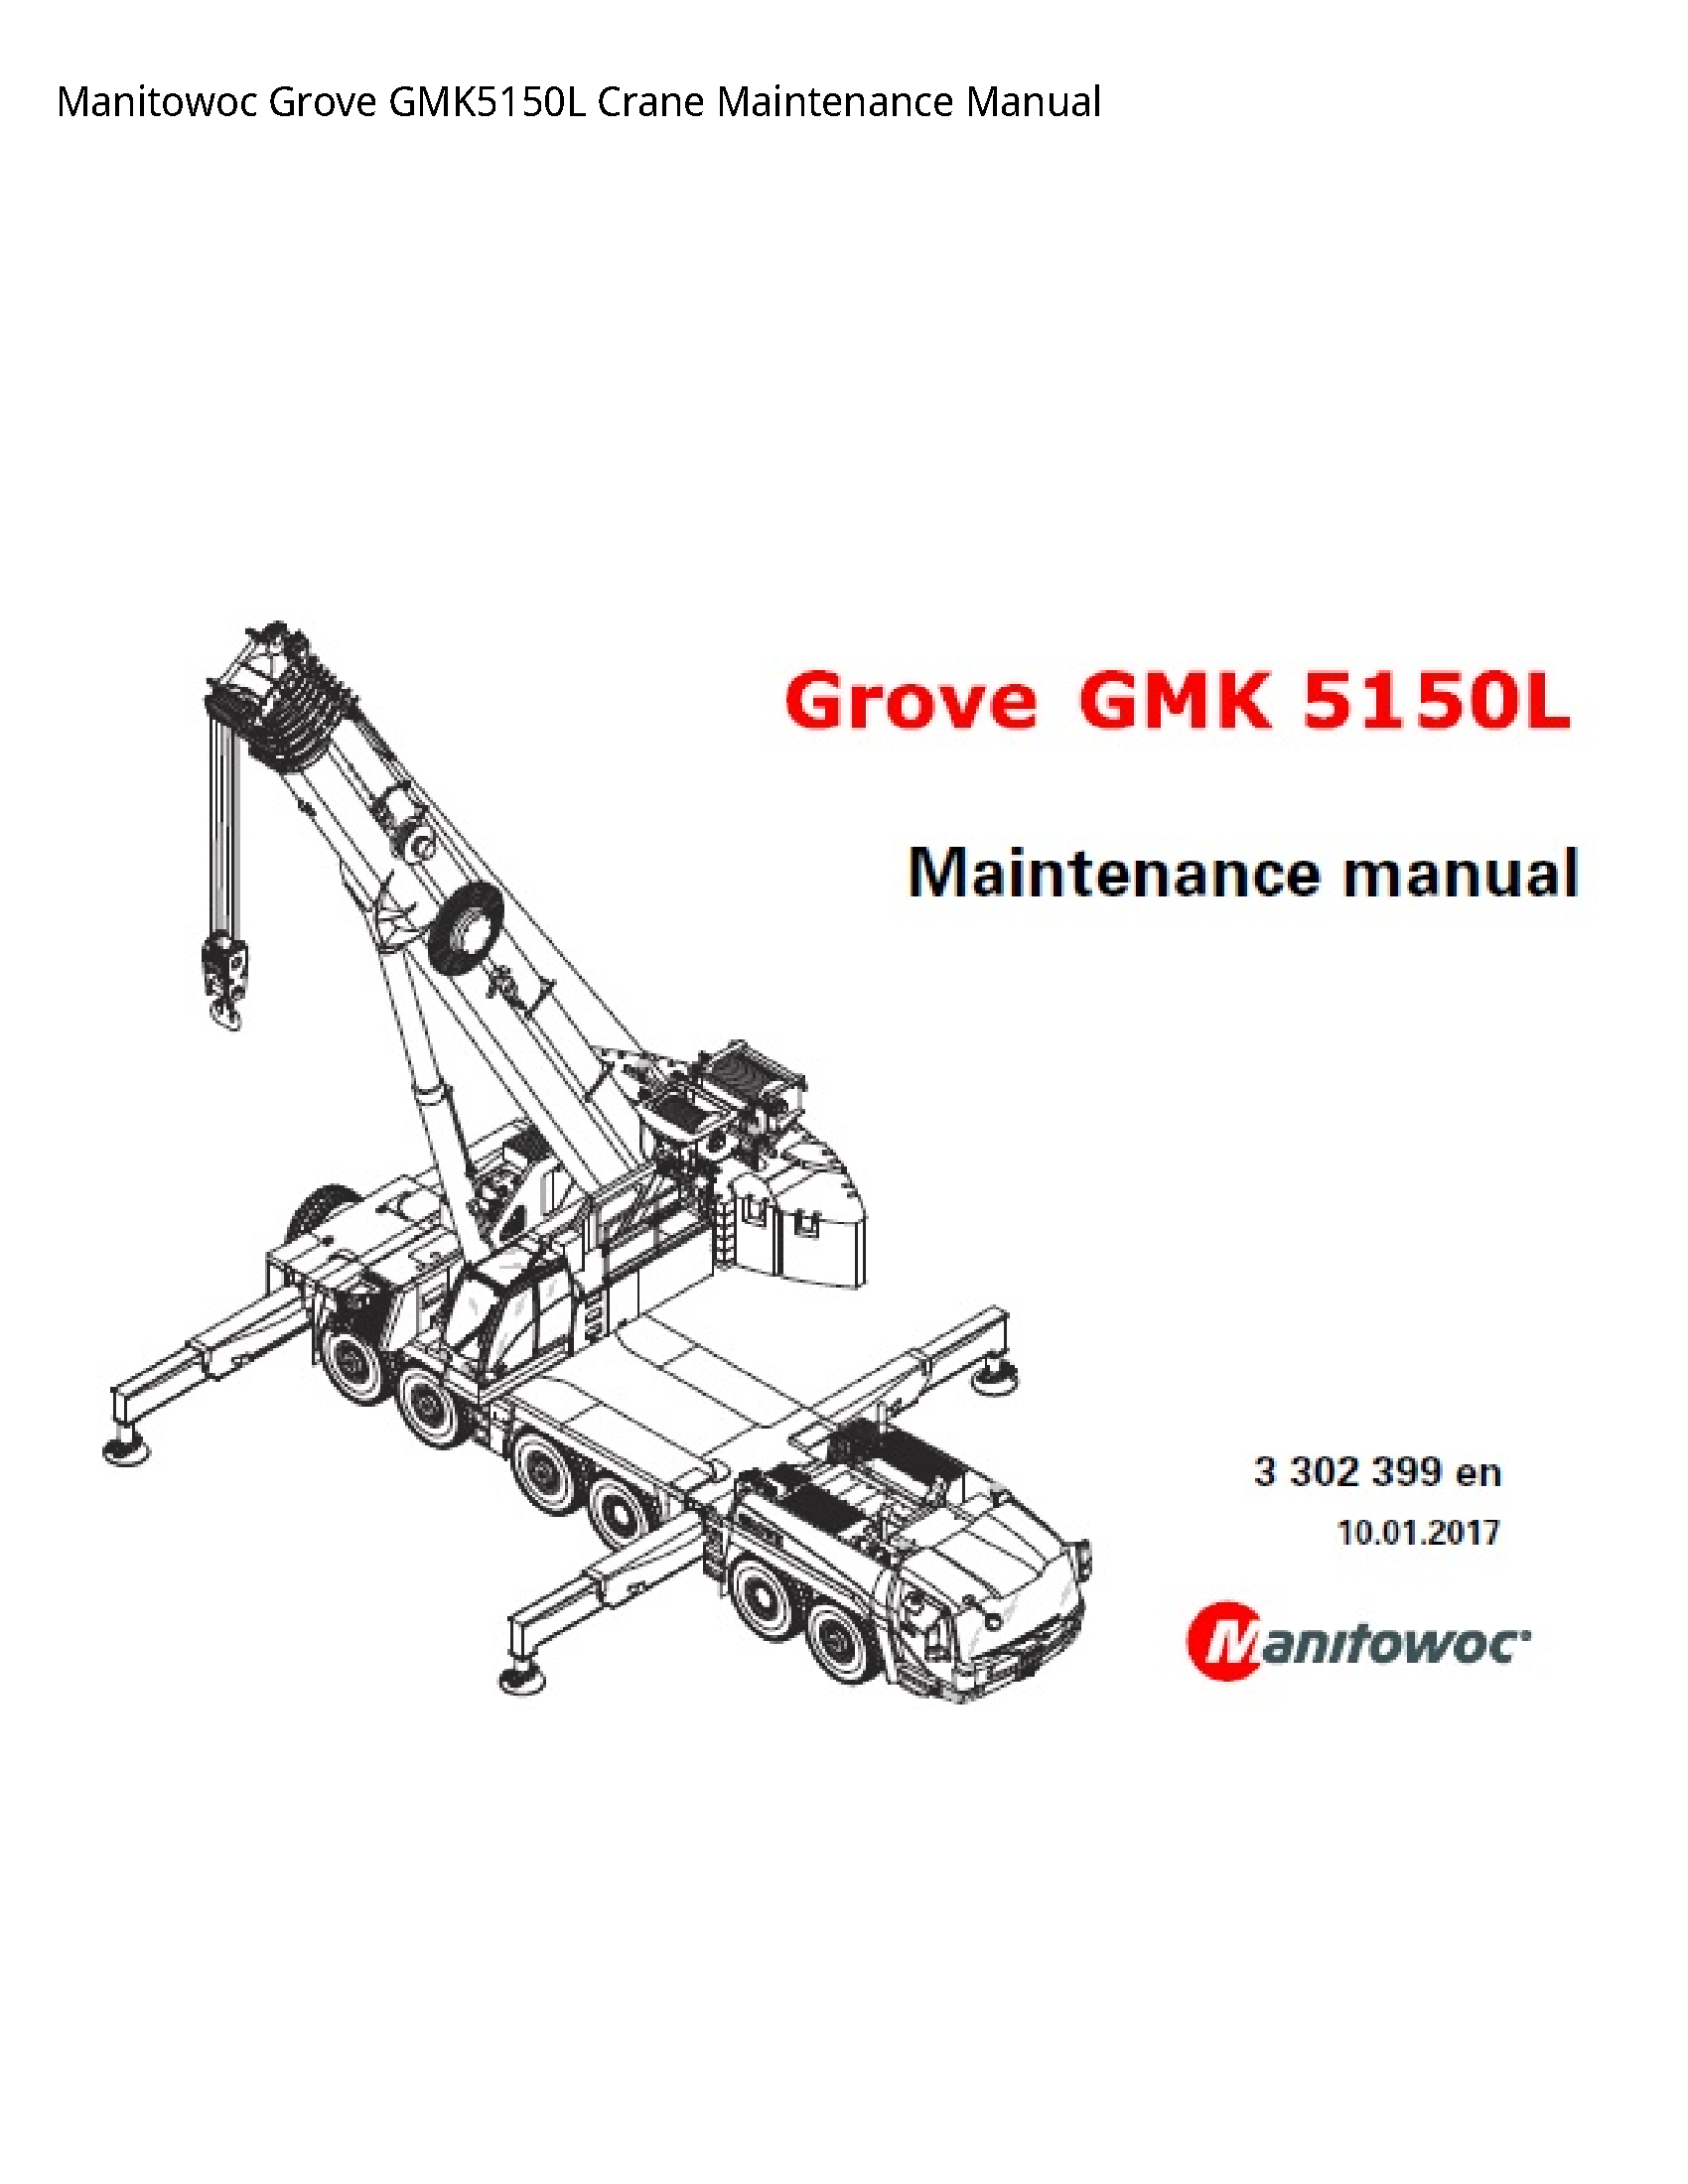 Manitowoc GMK5150L Grove Crane Maintenance manual